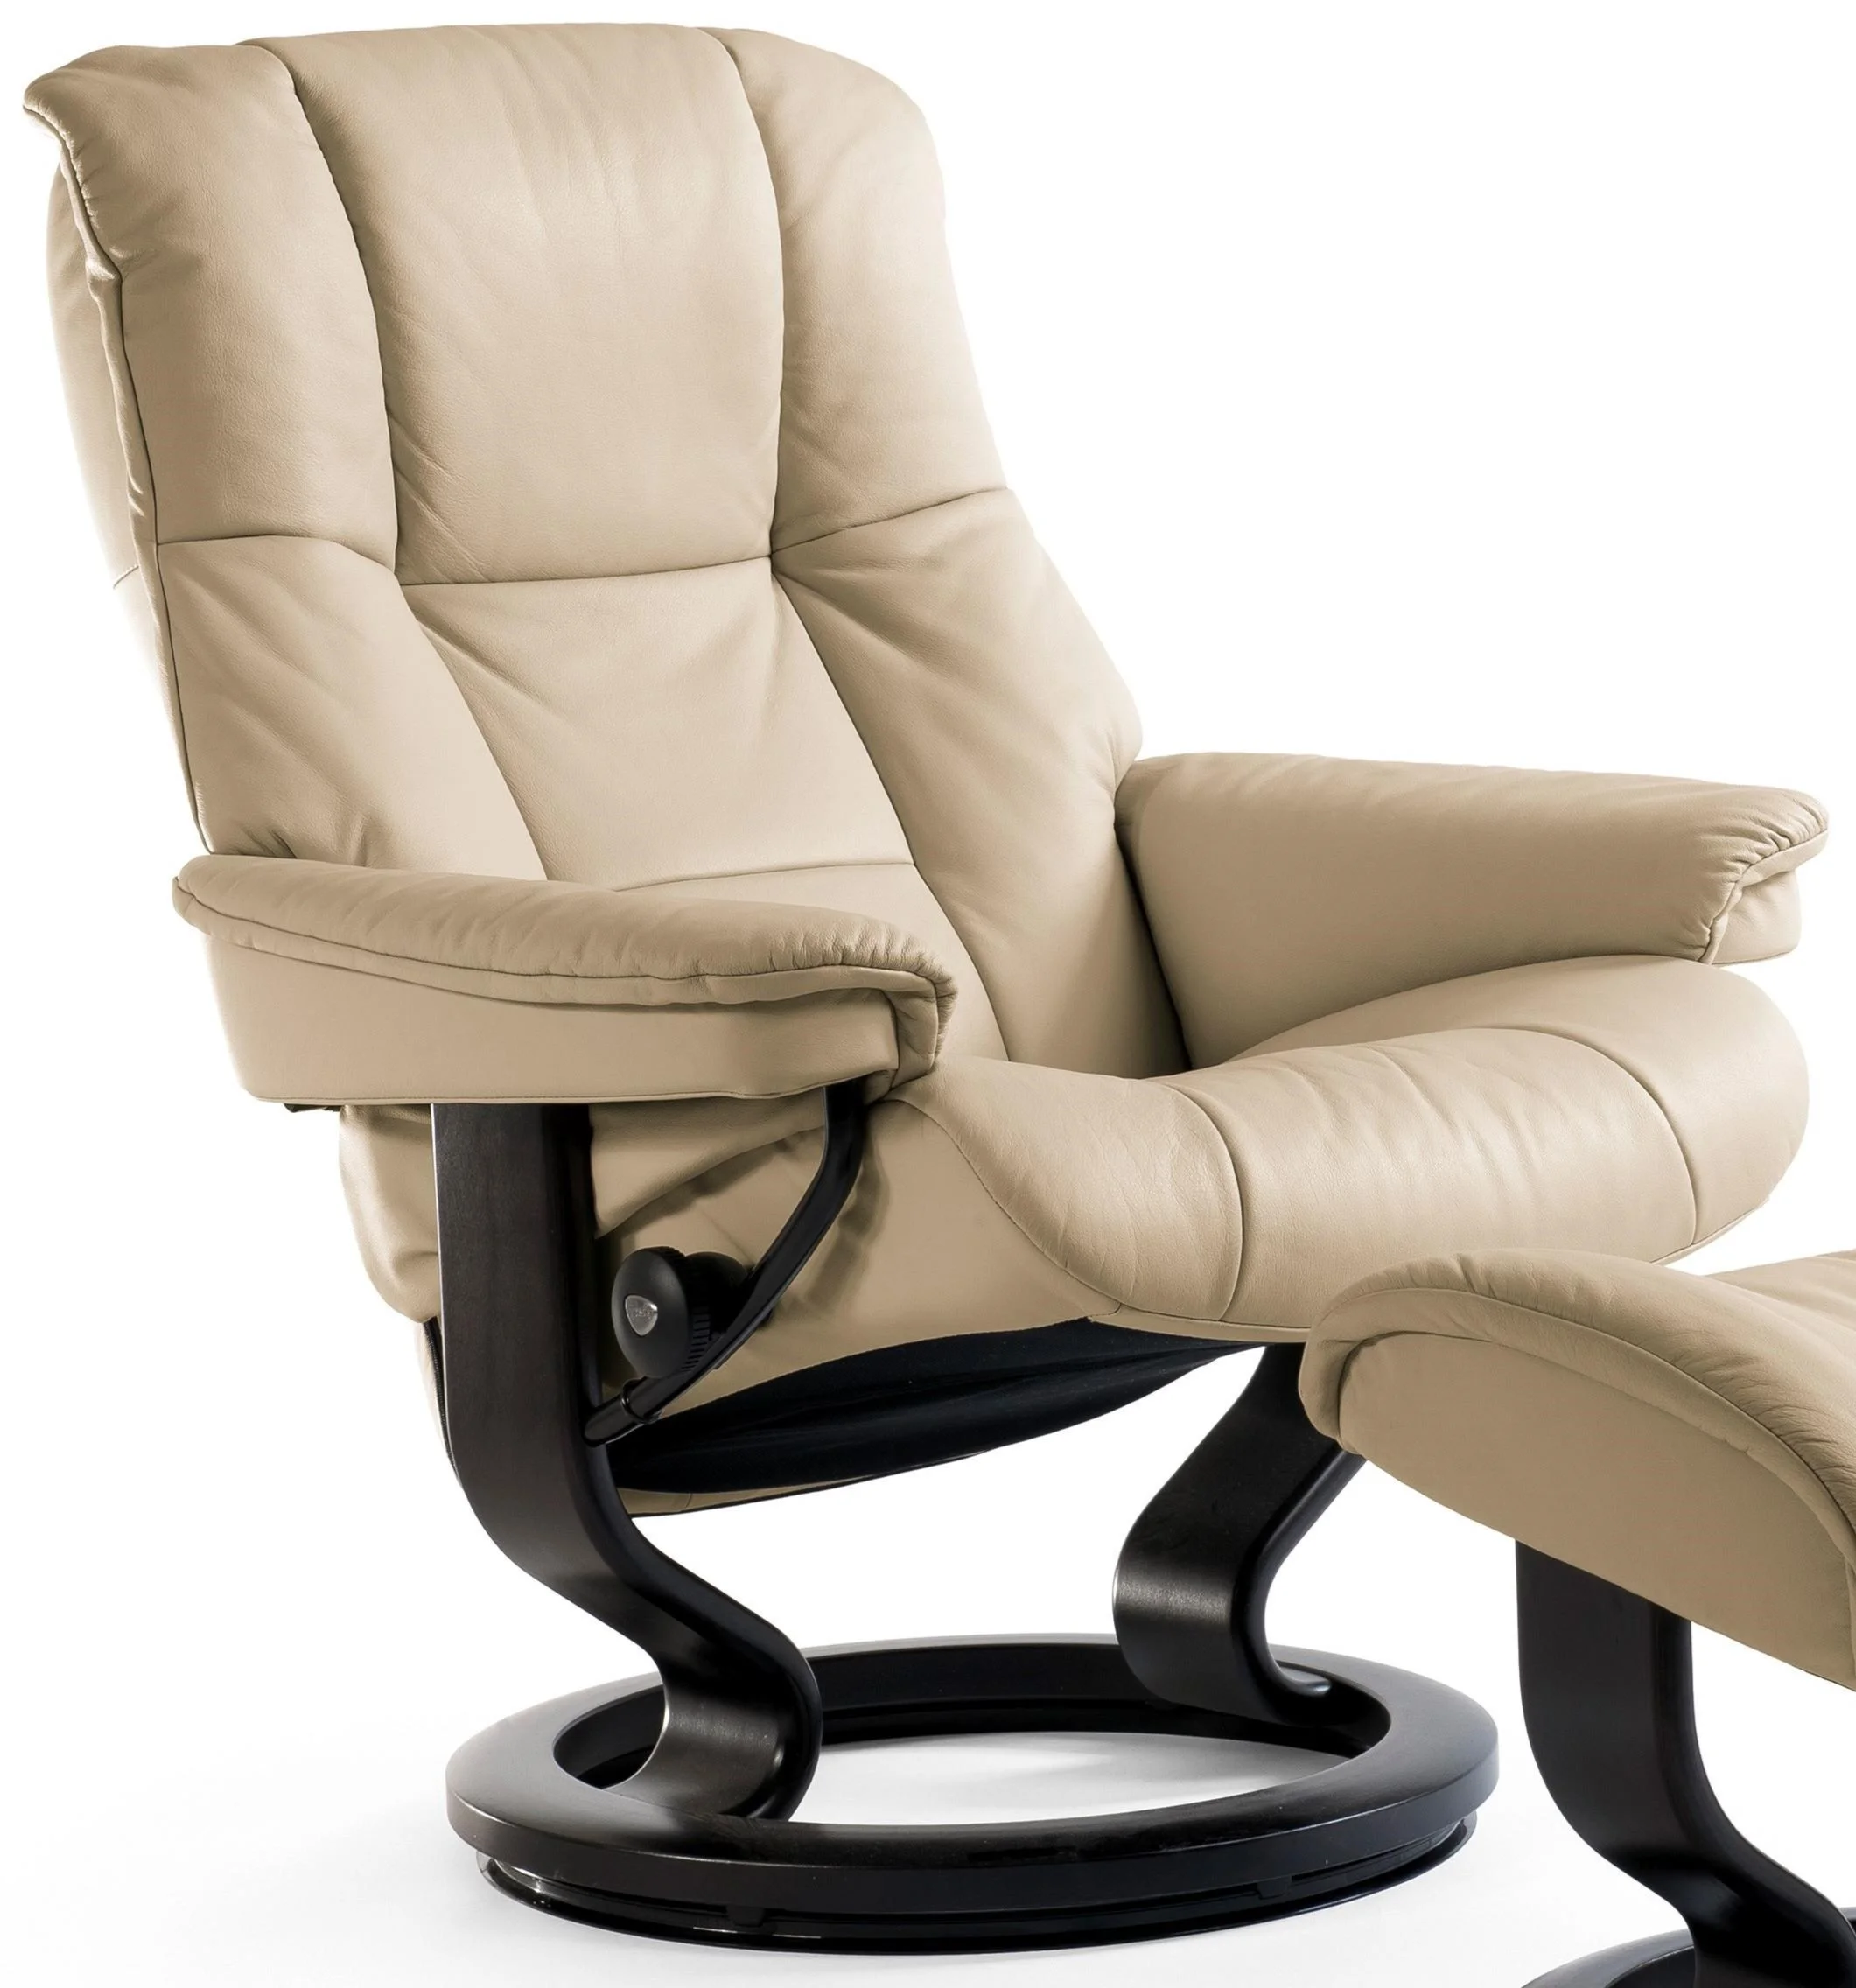 Stressless by Ekornes Mayfair Way | Chair Three Medium Recliner Sprintz Classic Reclining Furniture with Base - 